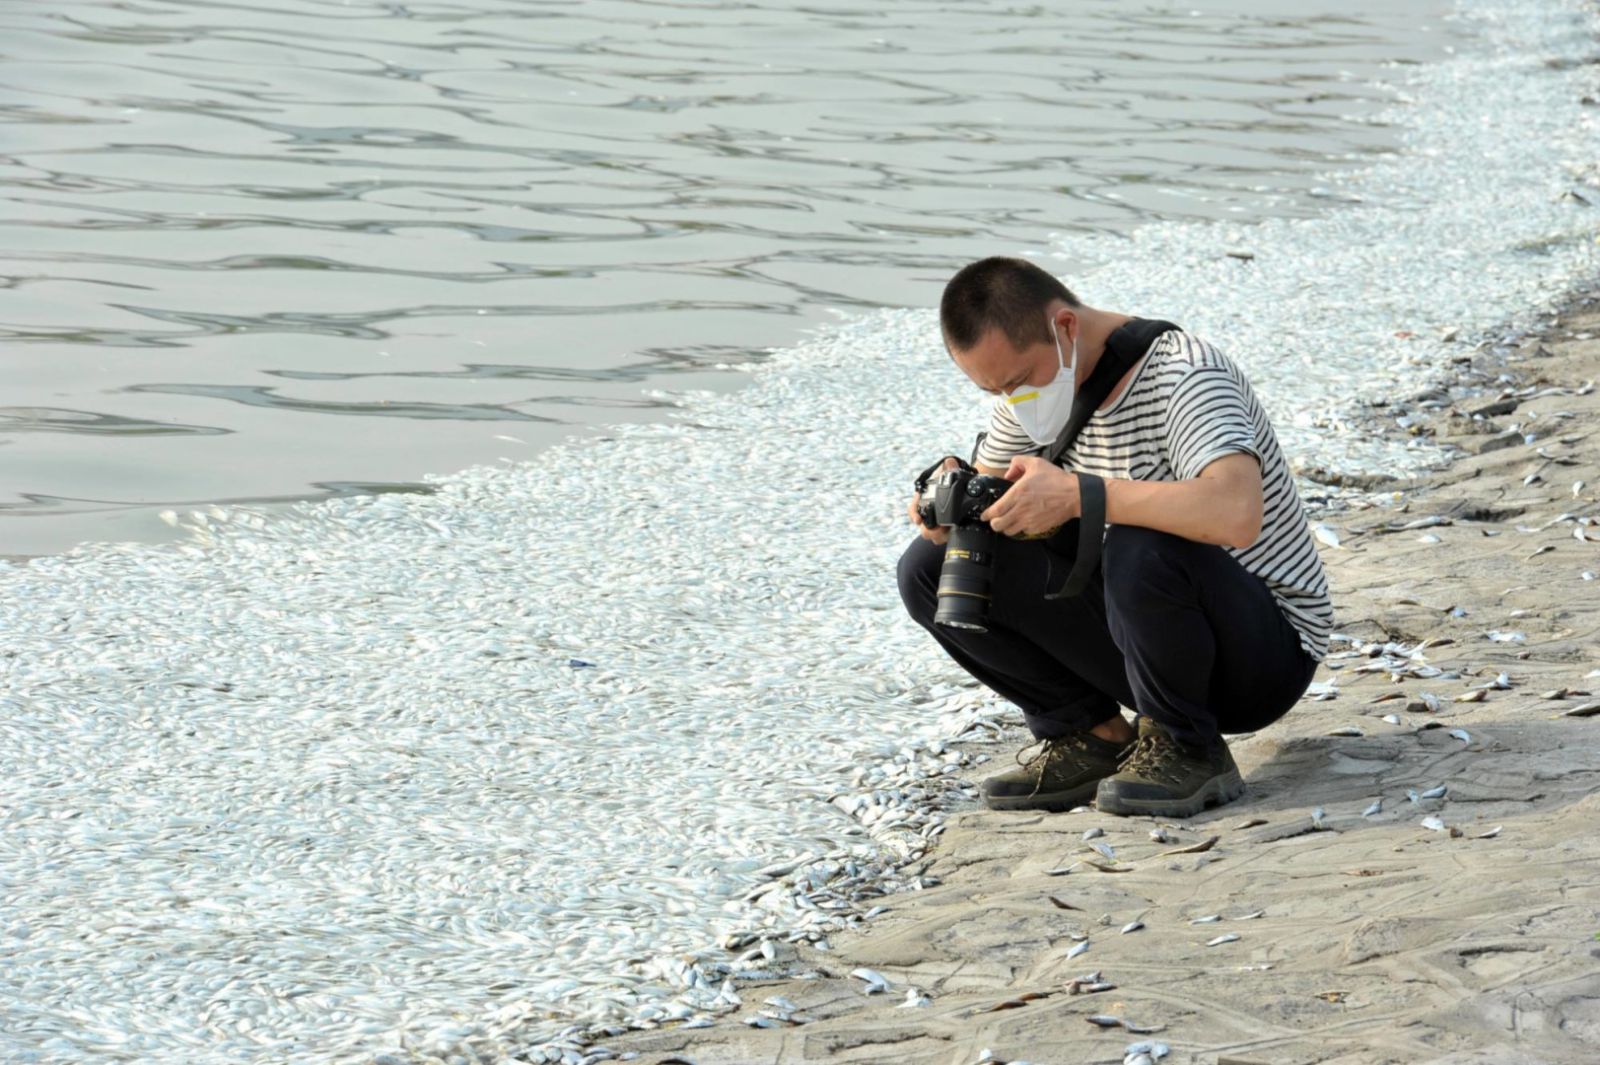 Dead fish surface in Tianjin's Hai River